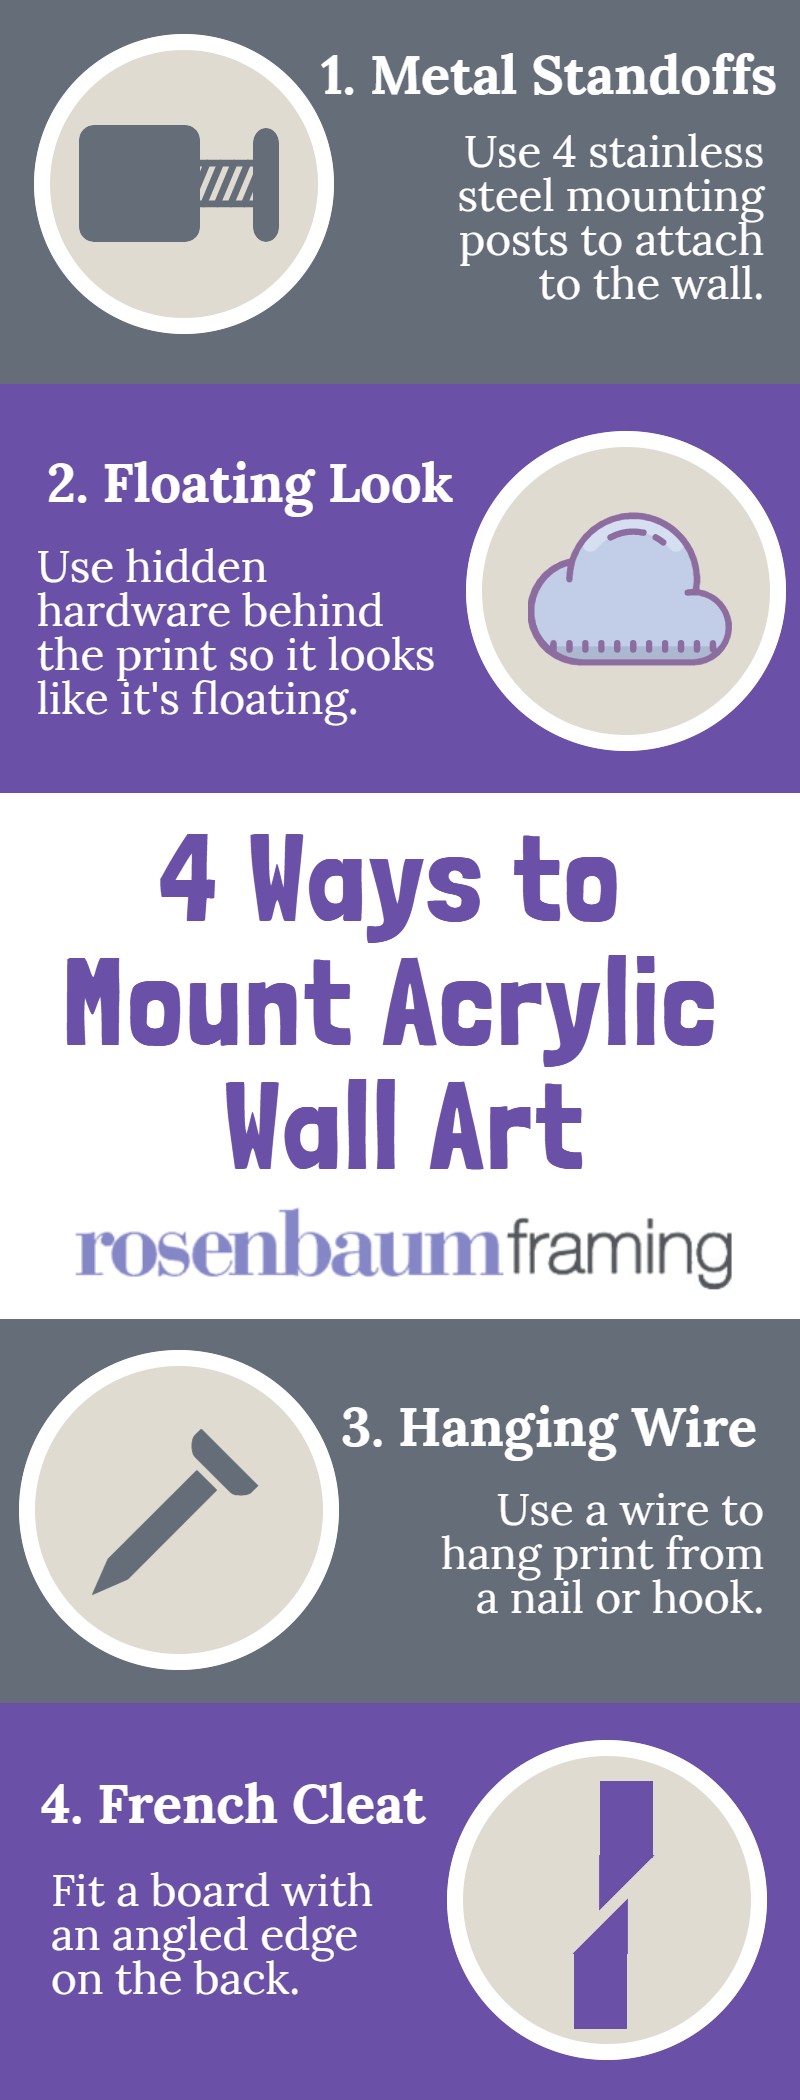 Ways to Mount Acrylic Wall Art Infographic